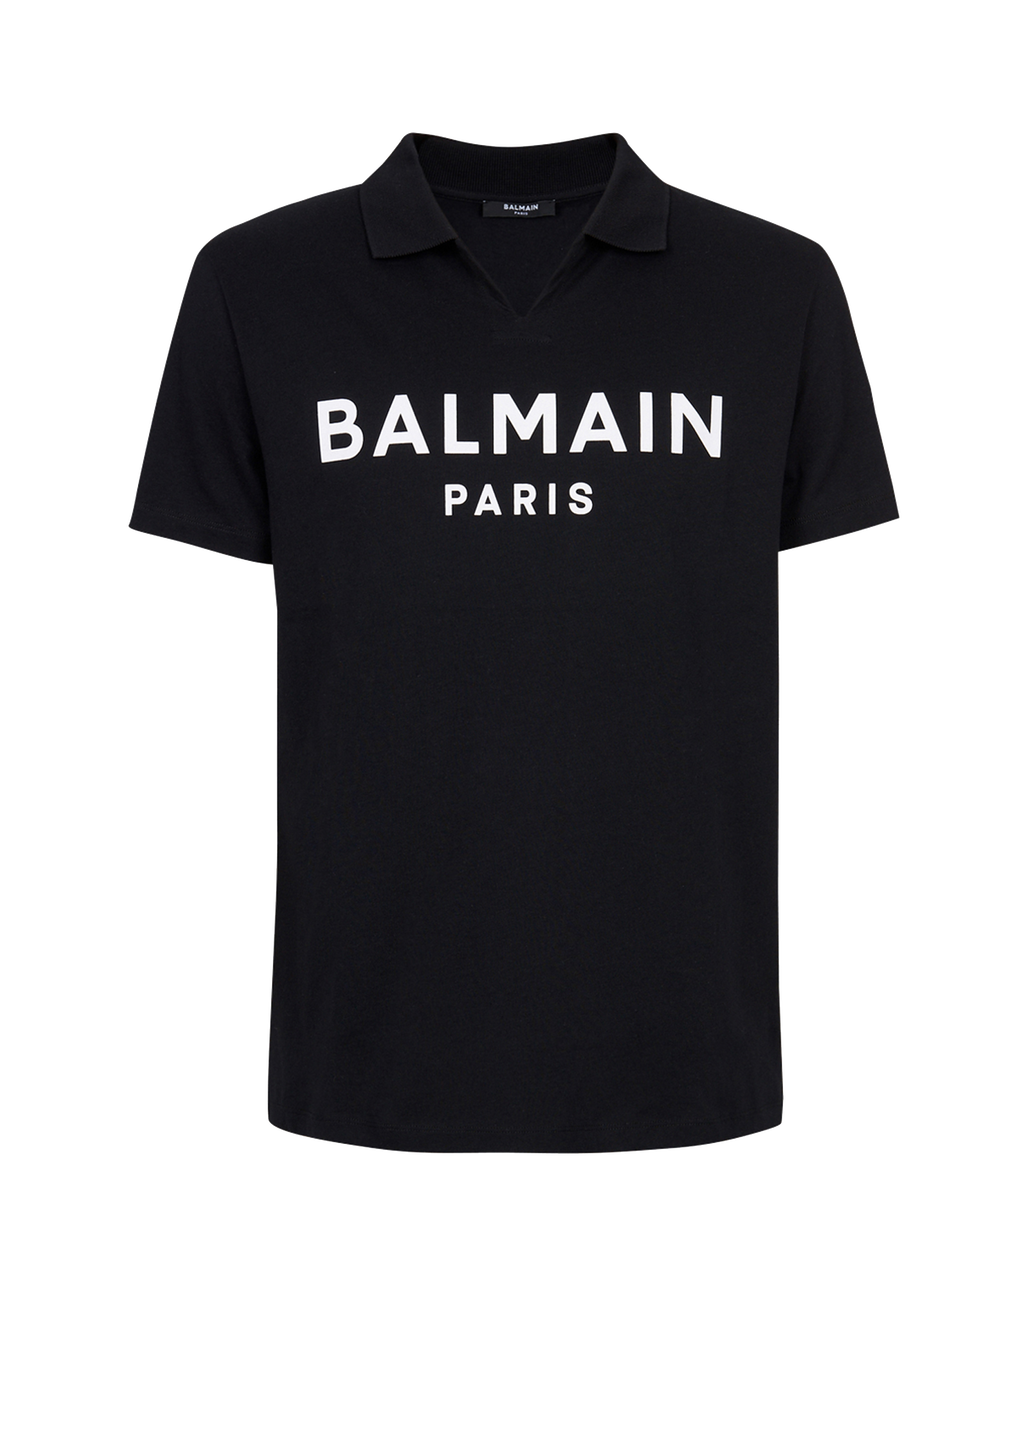 Polo in cotone con logo Balmain nero, nero, hi-res